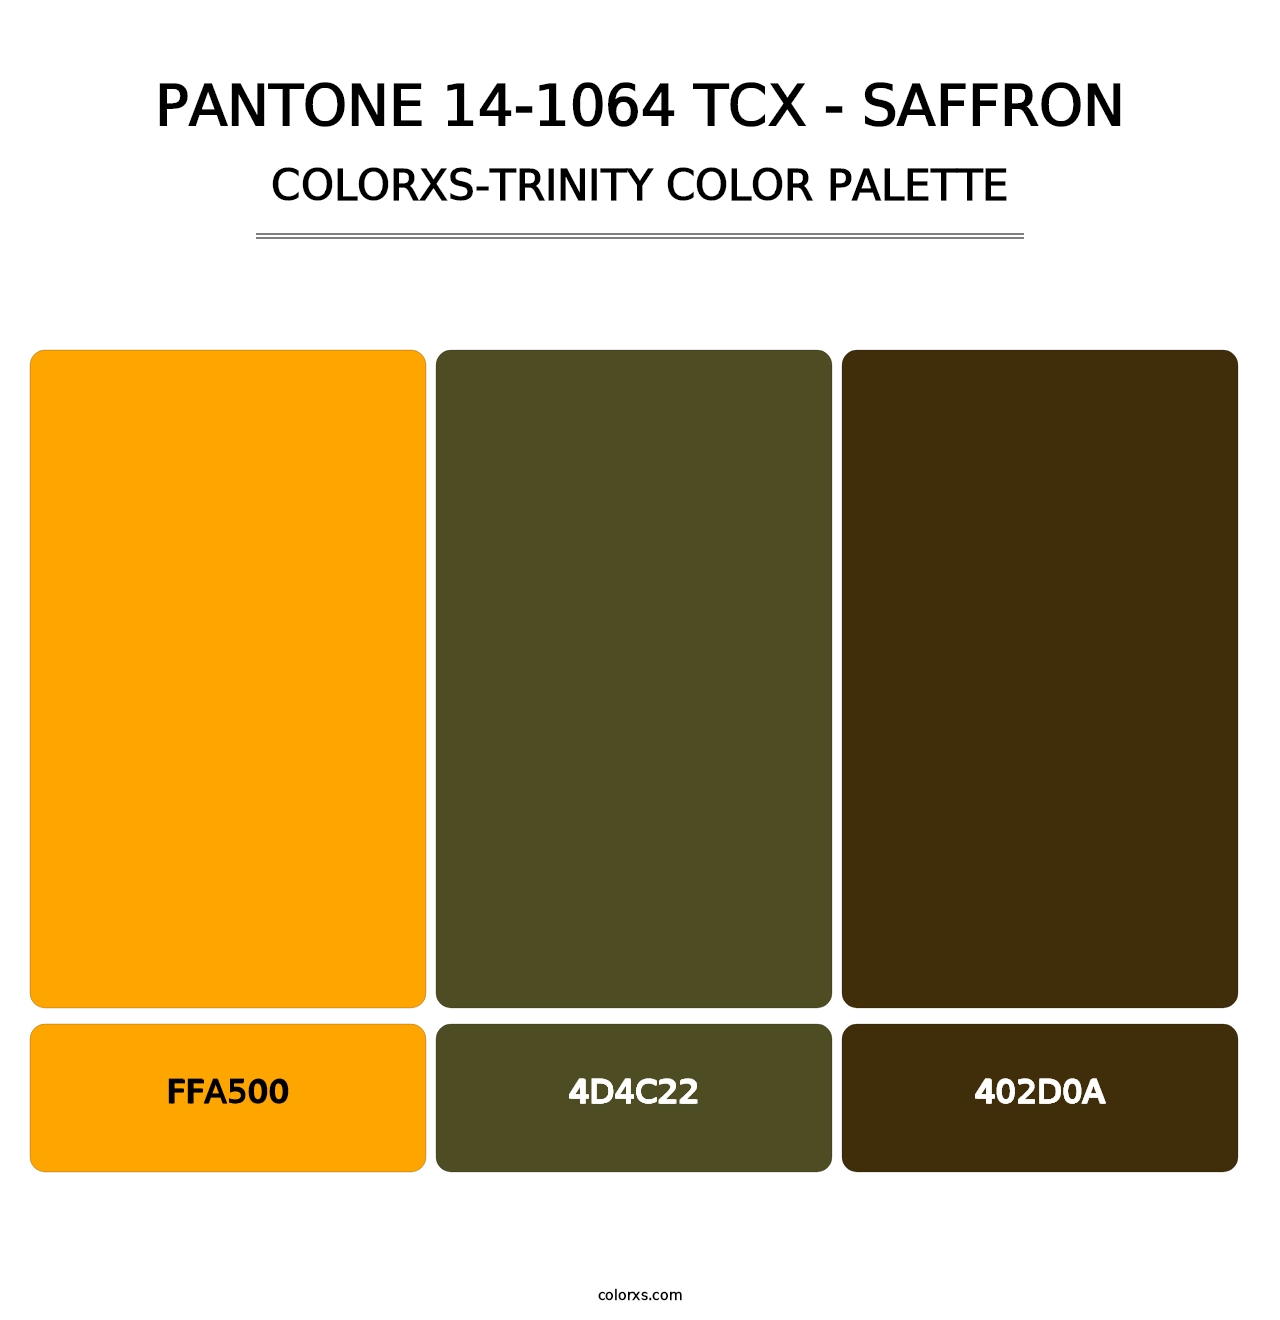 PANTONE 14-1064 TCX - Saffron - Colorxs Trinity Palette